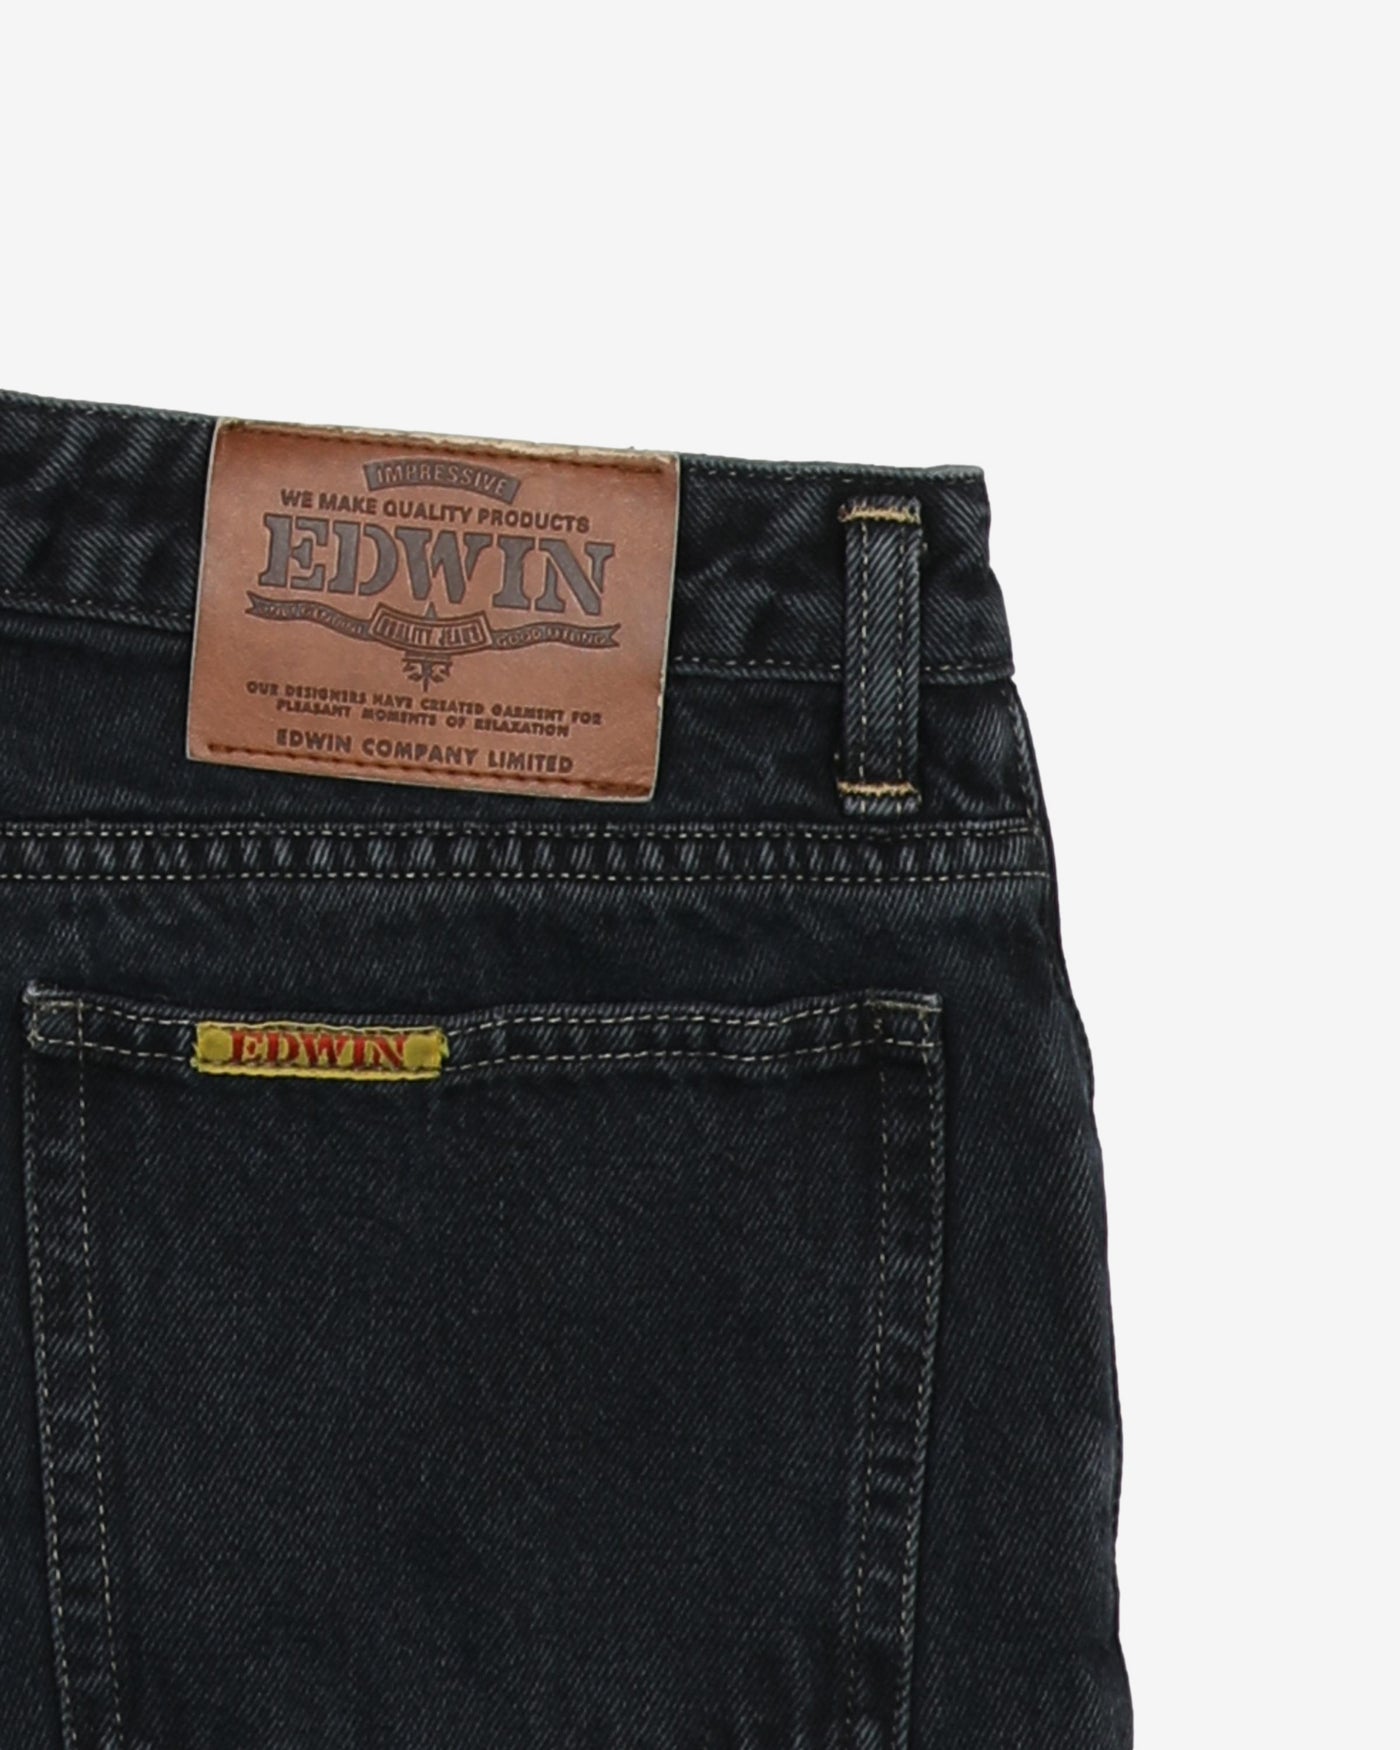 Vintage 90s Edwin Faded Black Denim Jeans - W29 L32